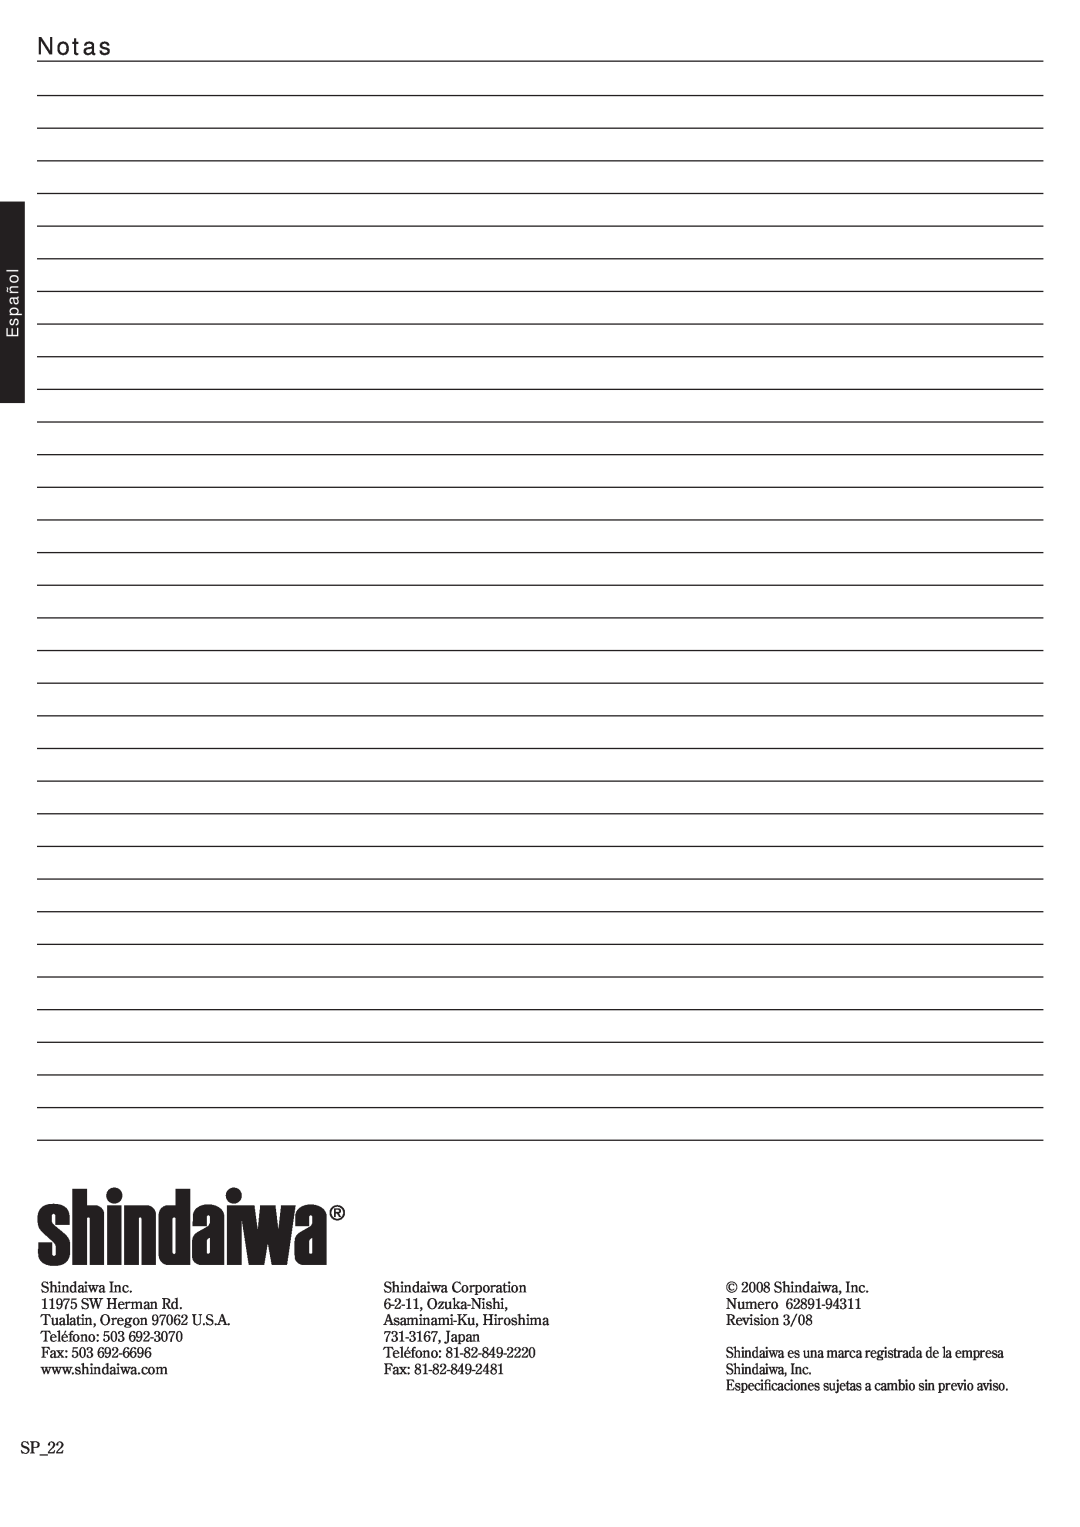 Shindaiwa 62891-94311 manual Notas, Español, SP22 